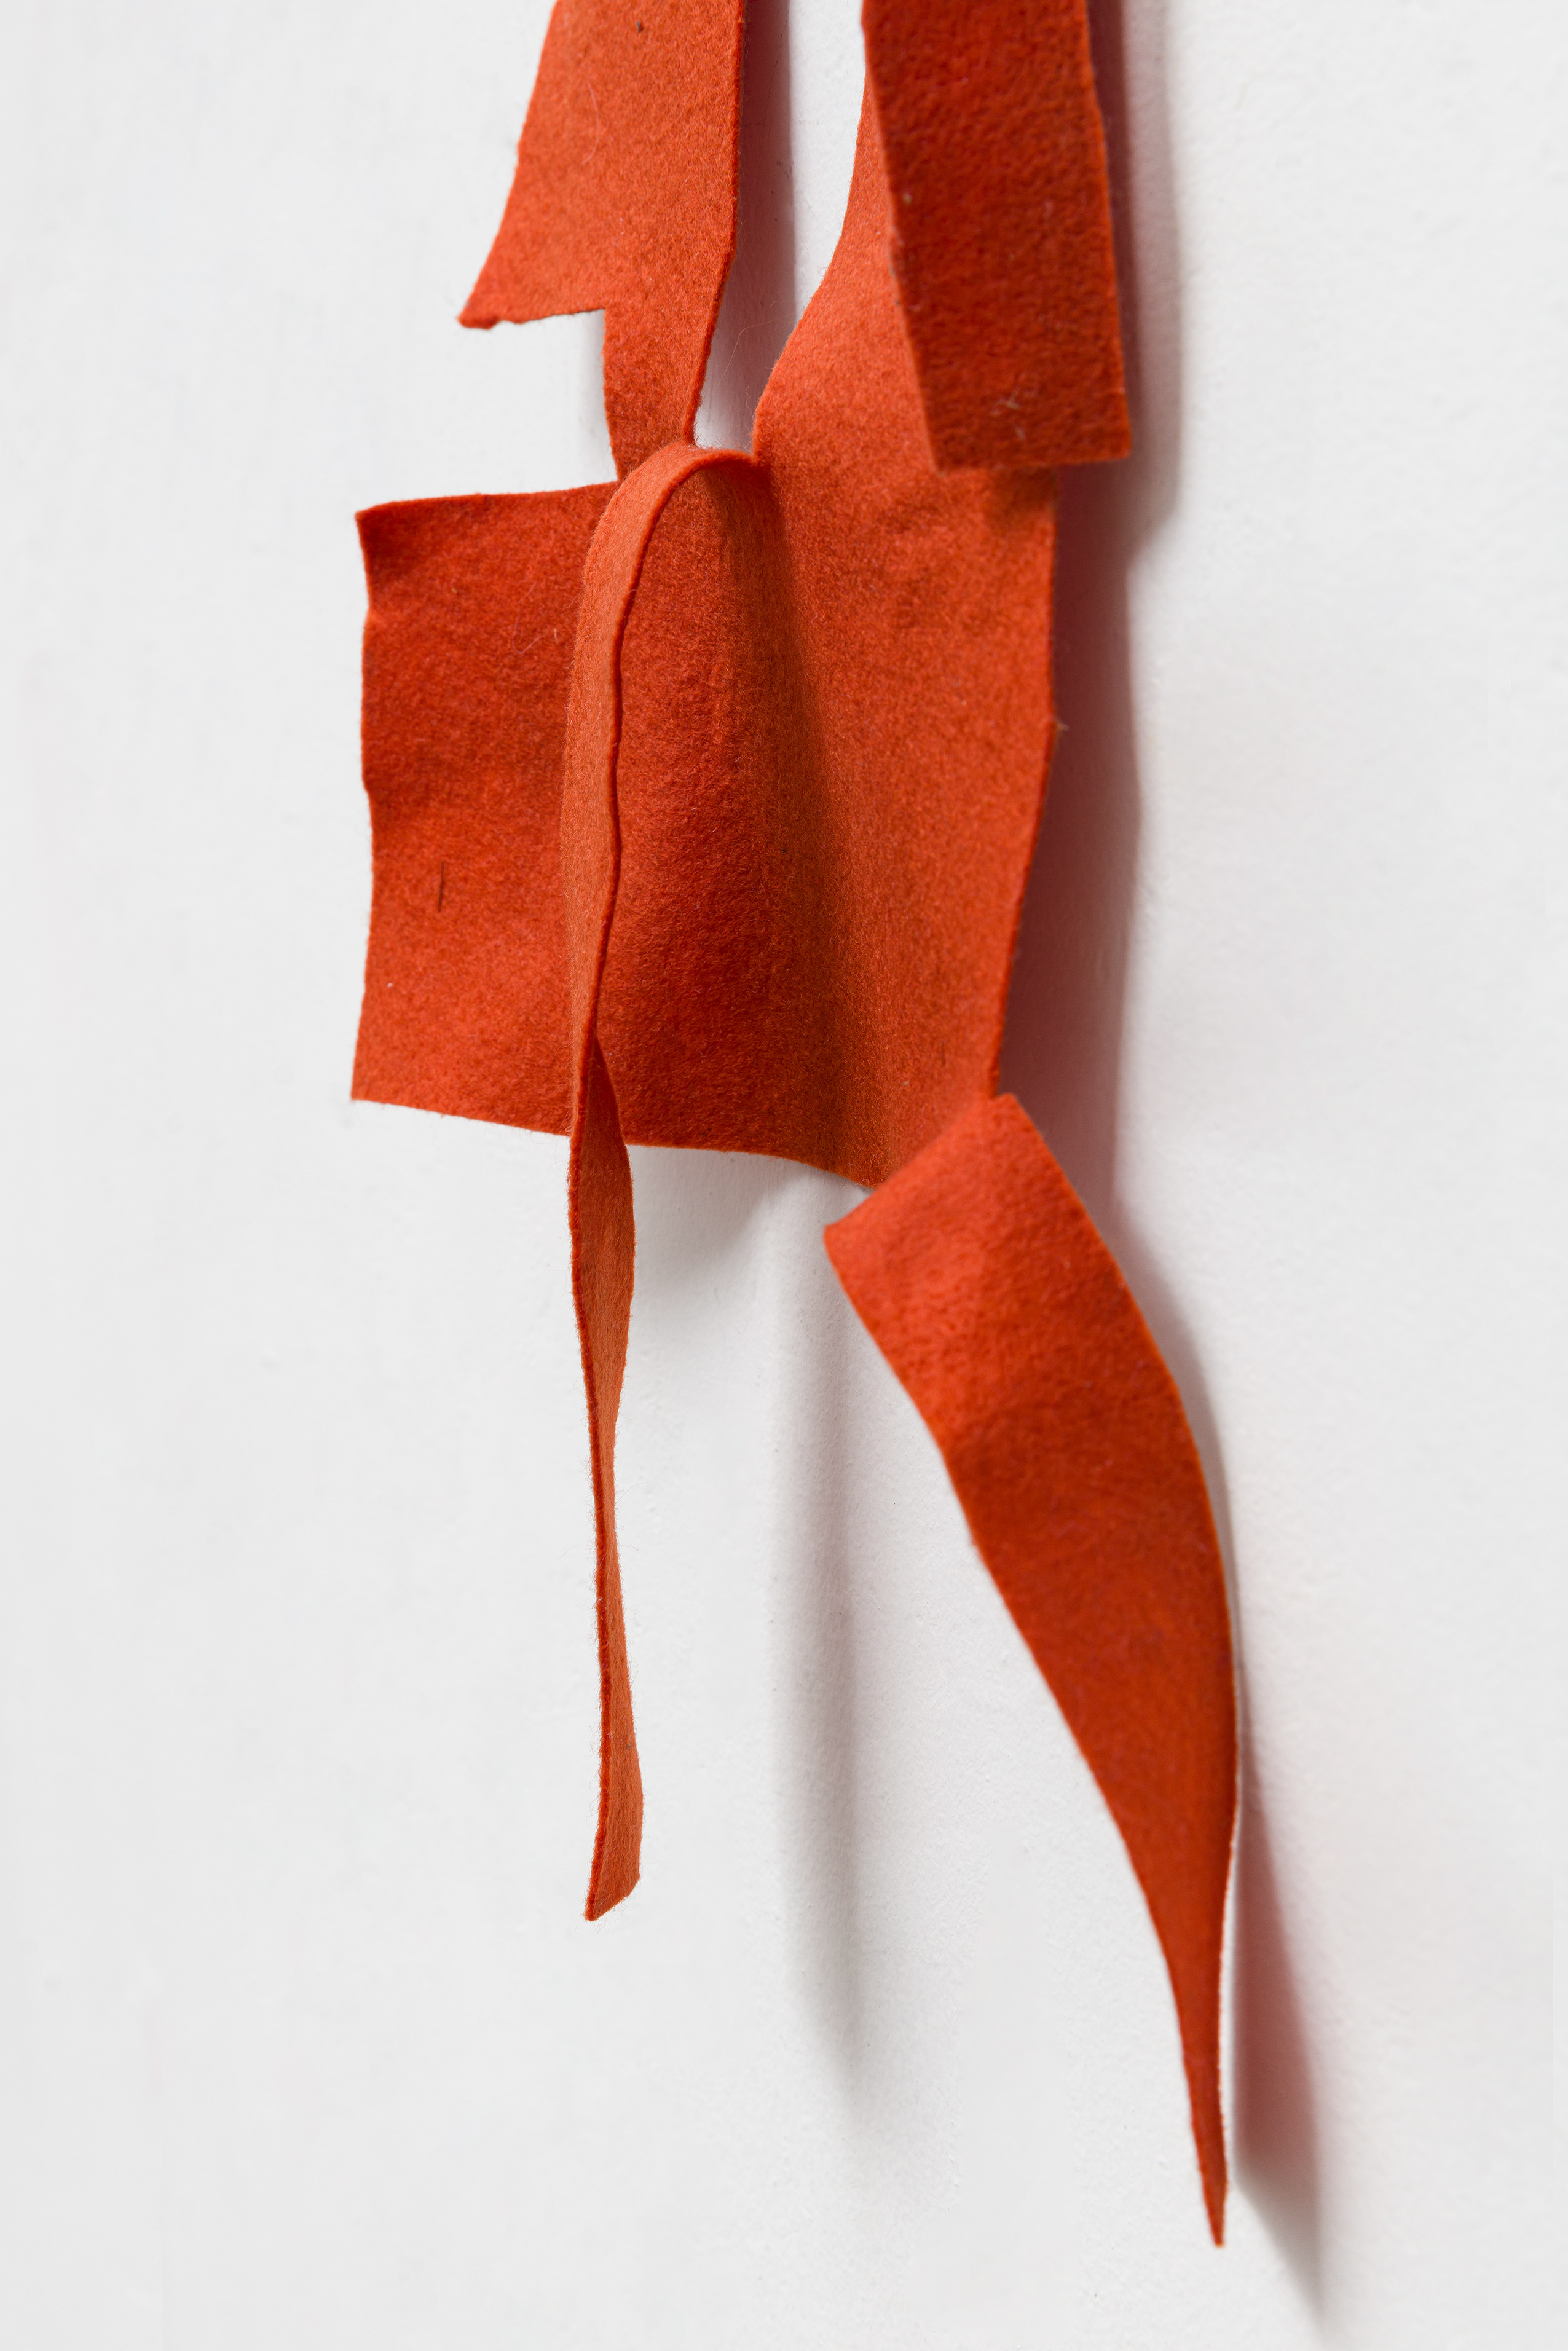 Detail view of Paulo Monteiro's Untitled felt piece